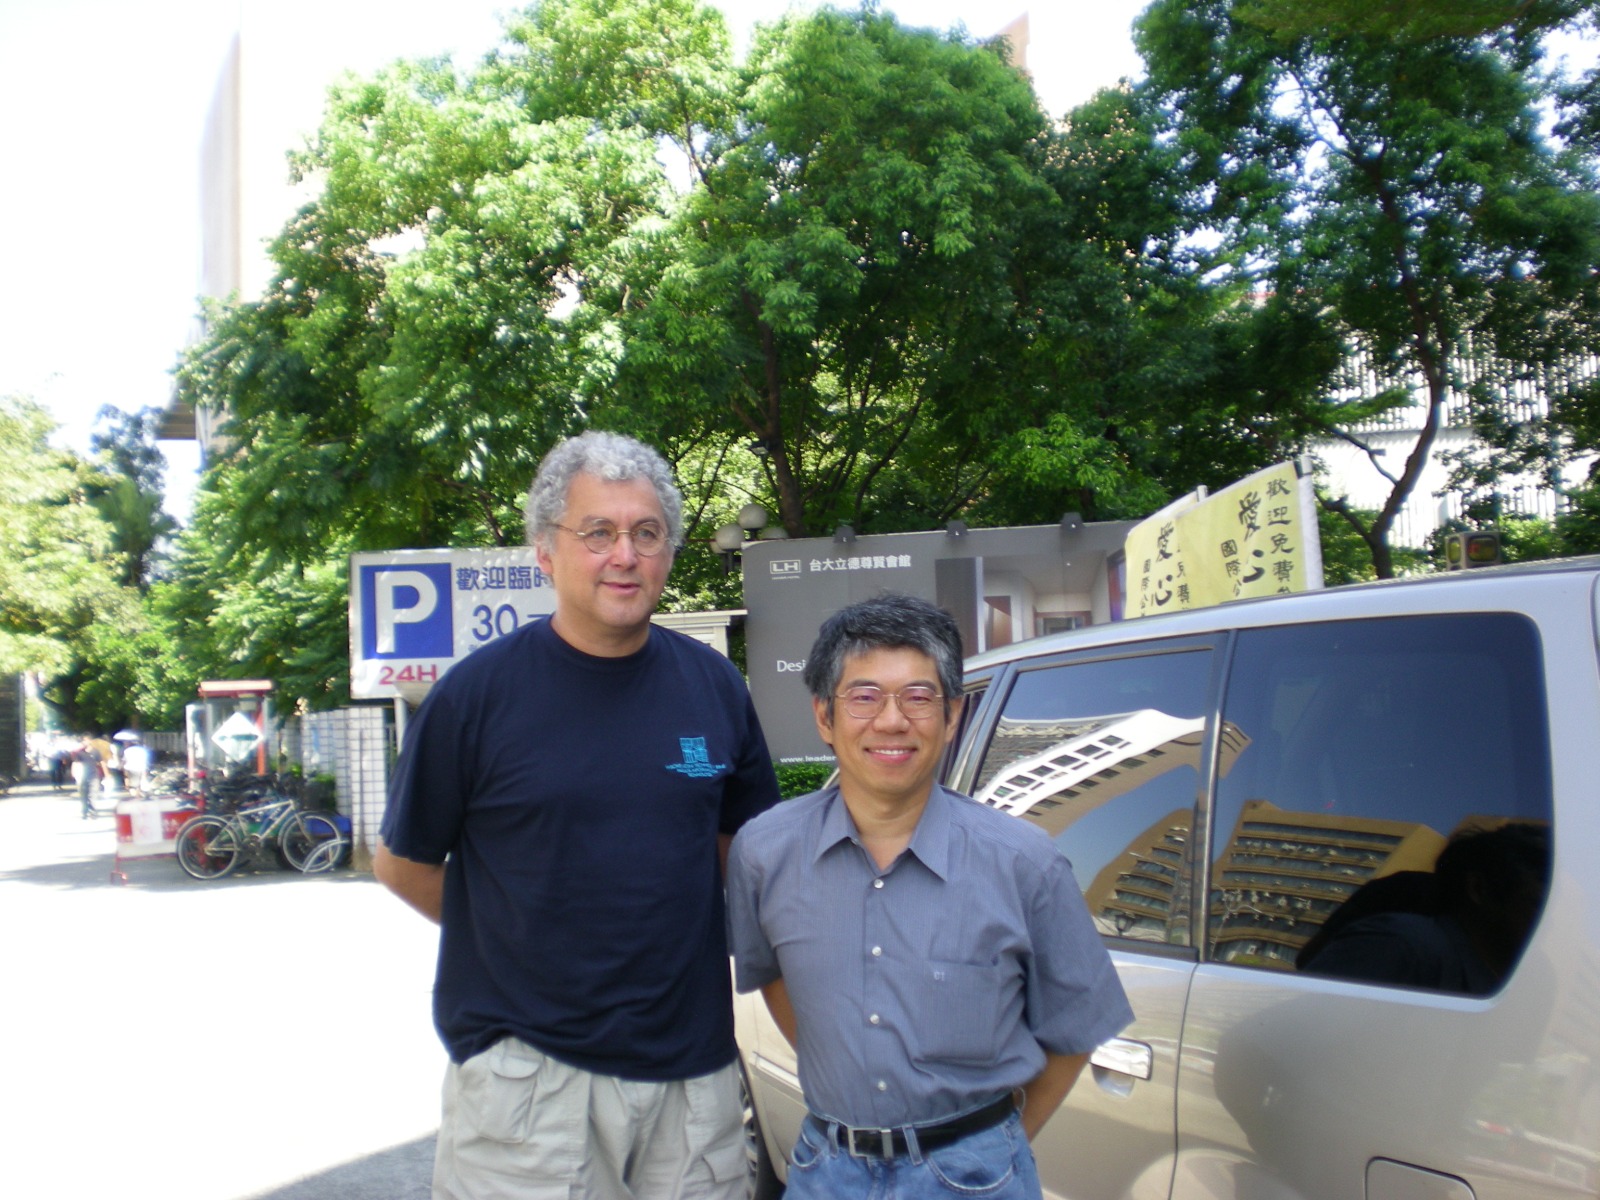 Me and my host Prof. Hsu-Chun Yen